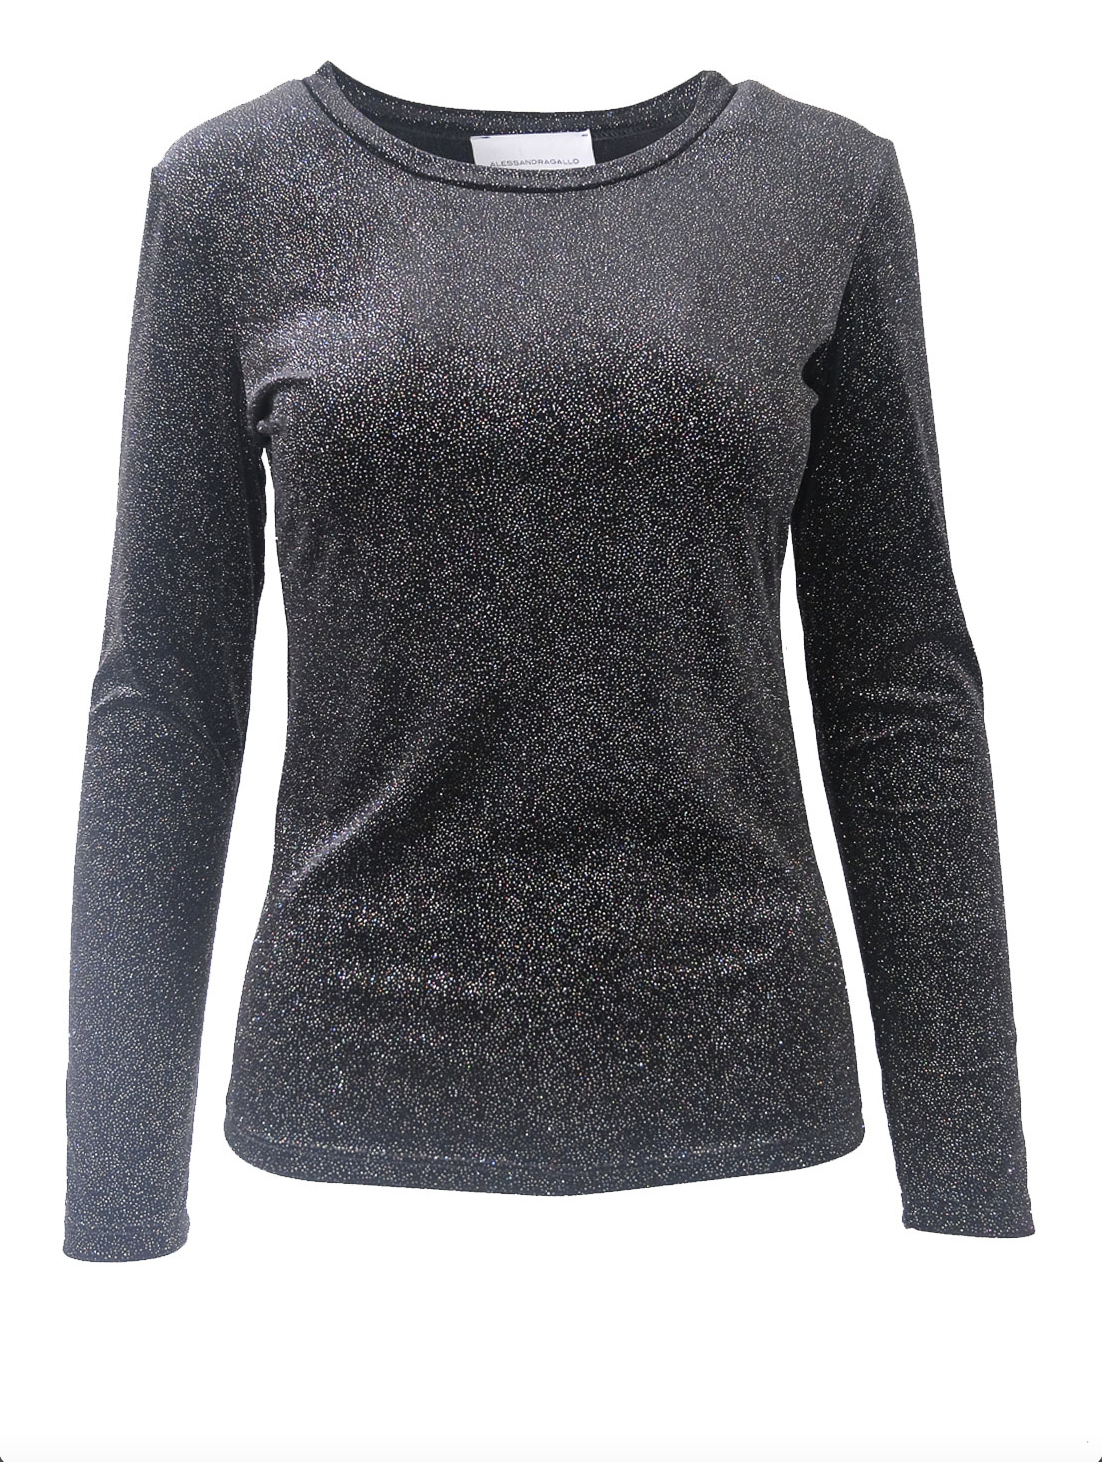 VIOLET - black glitter chenille sweater